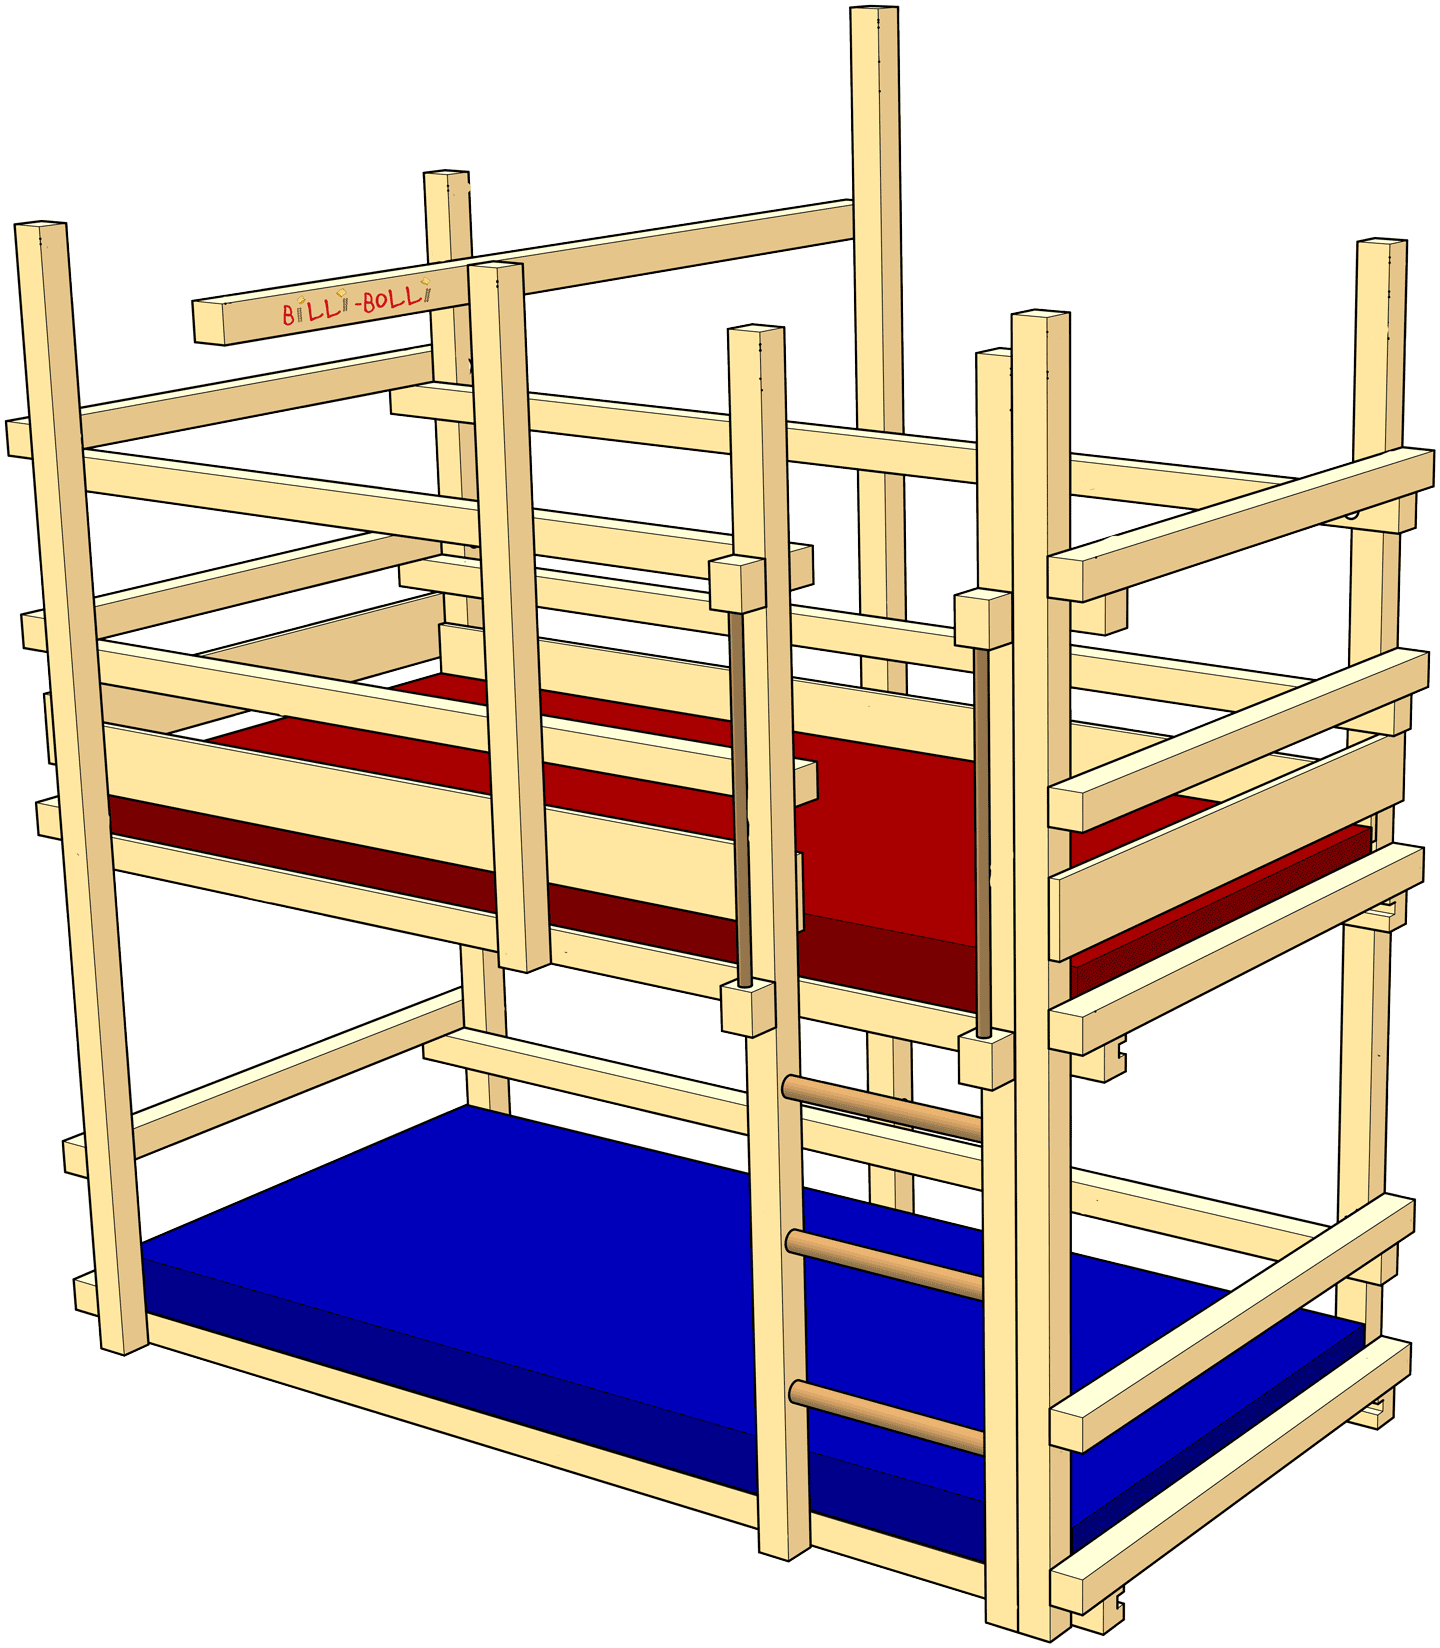 Bunk Bed variant for smaller children